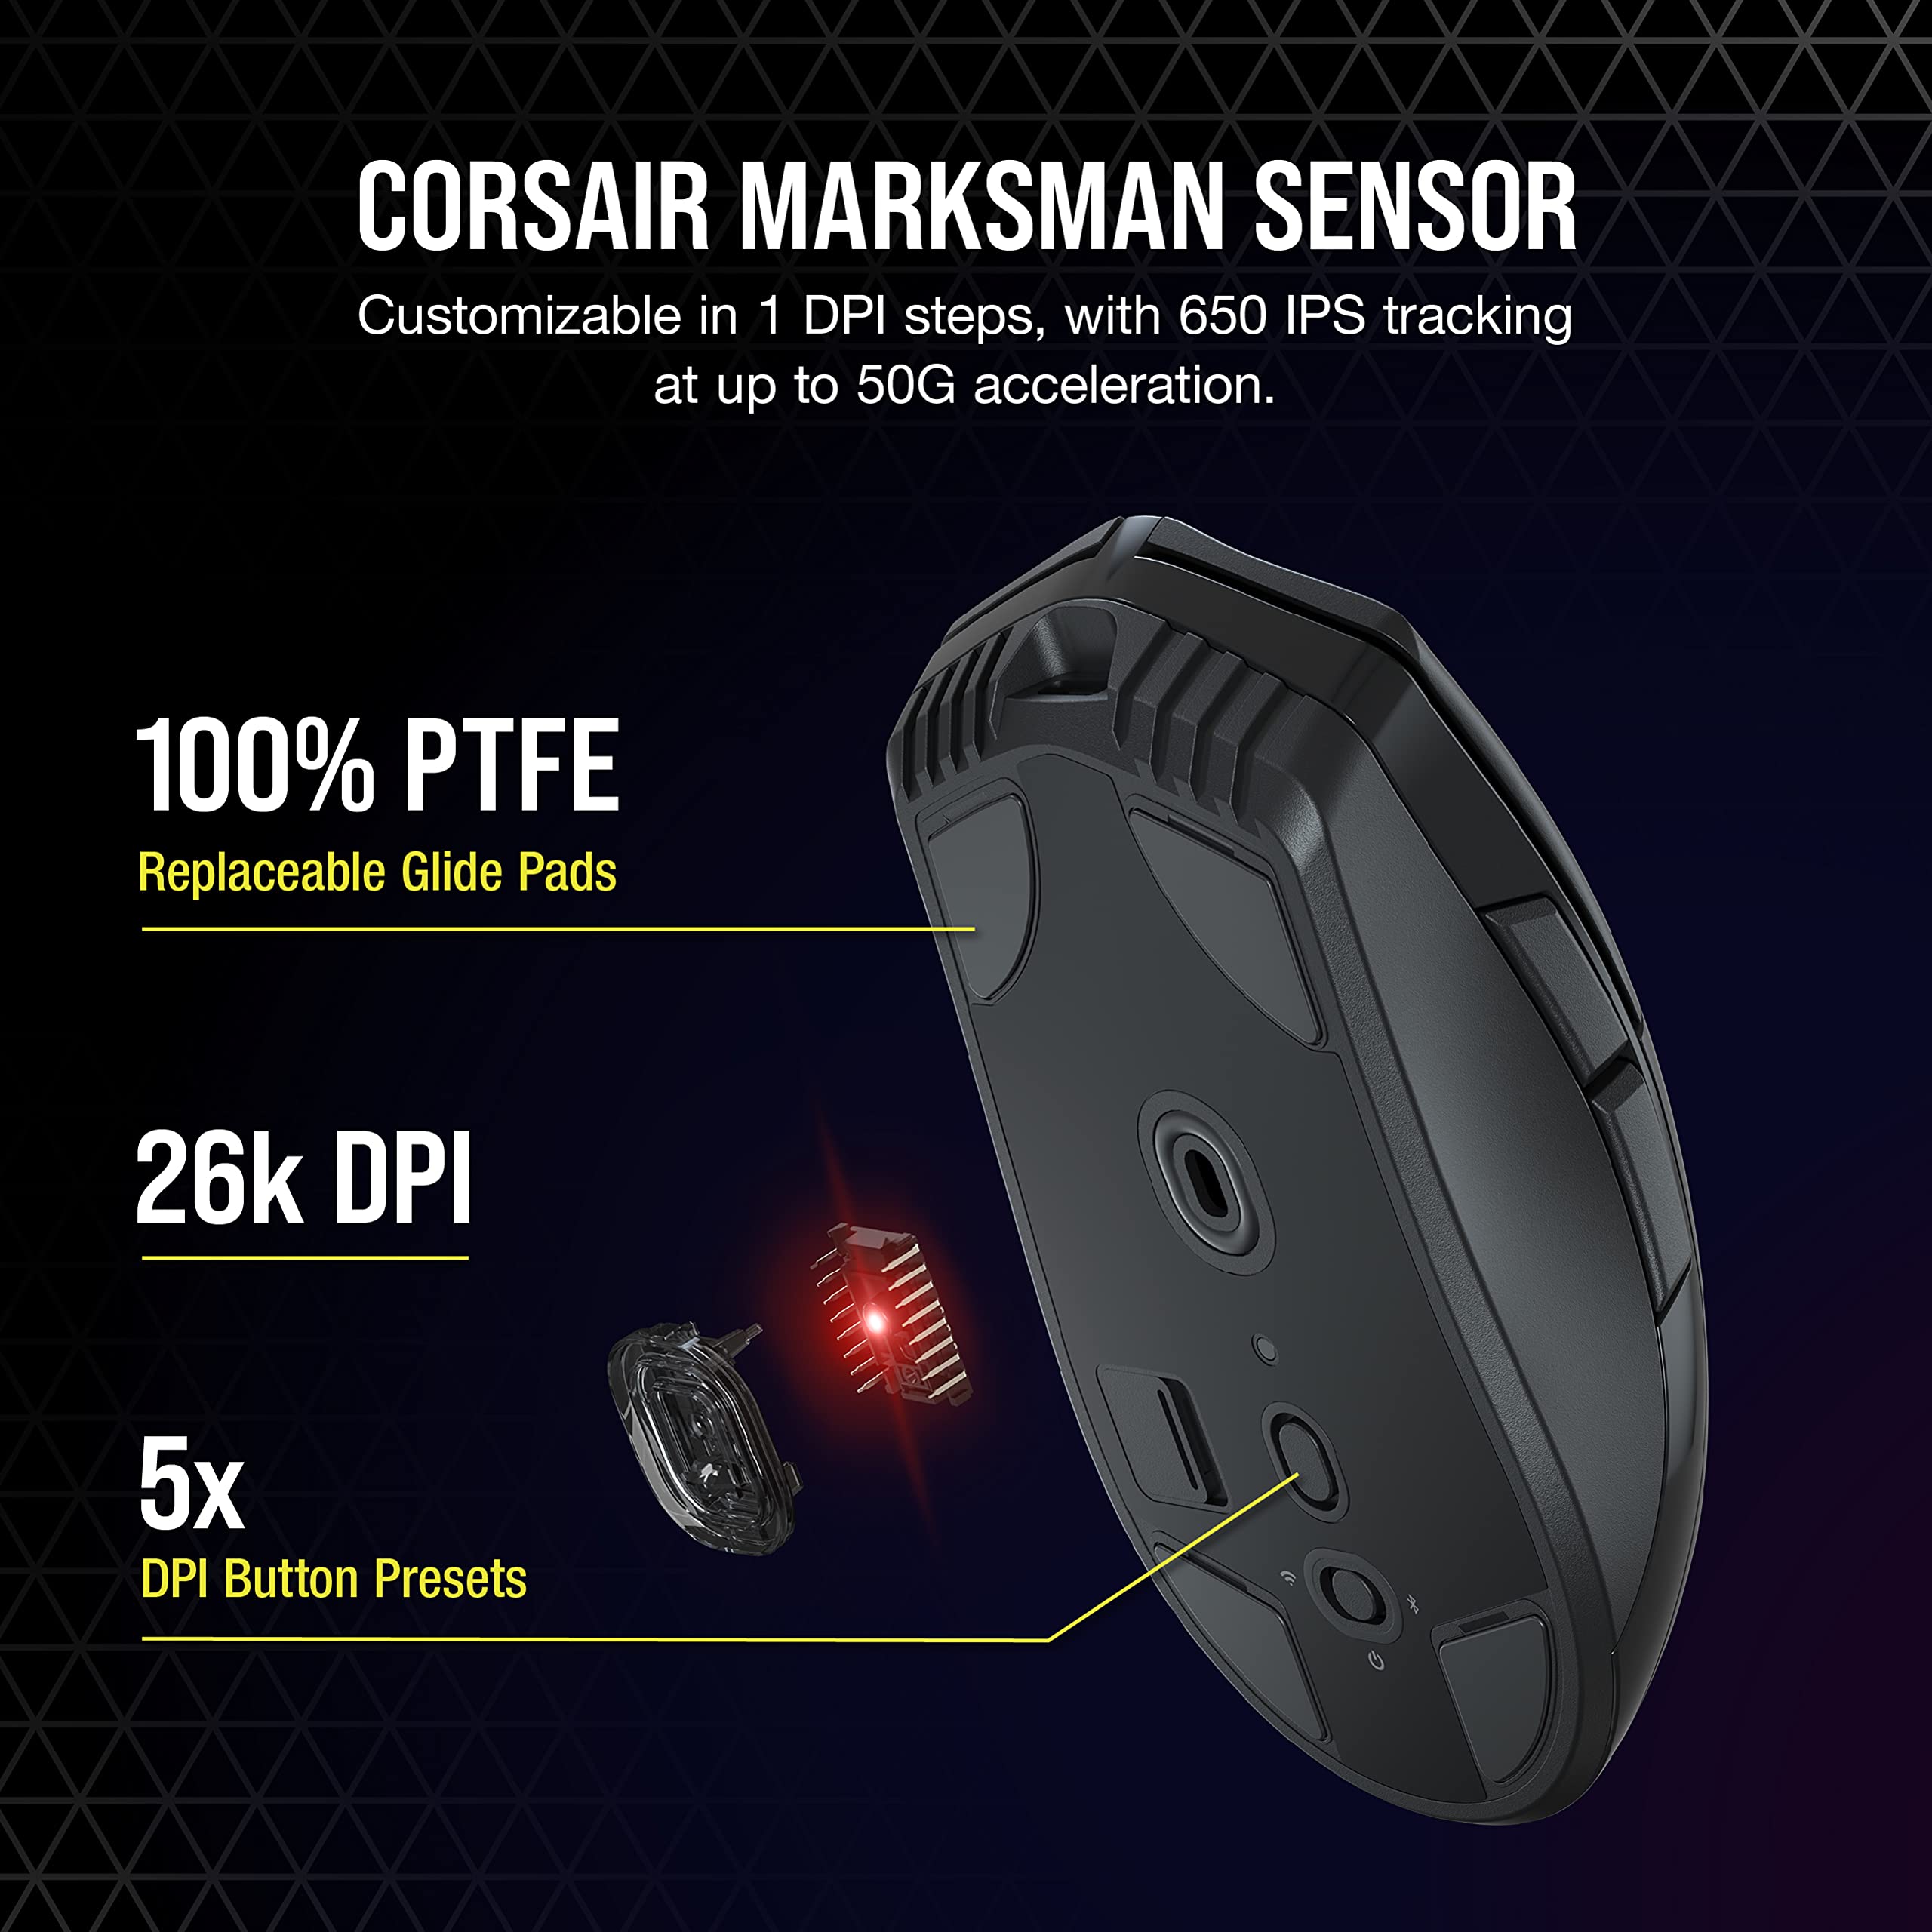 Corsair SABRE RGB PRO WIRELESS CHAMPION SERIES, Ultra-lightweight FPS/MOBA Wireless Gaming Mouse, Black (Renewed)